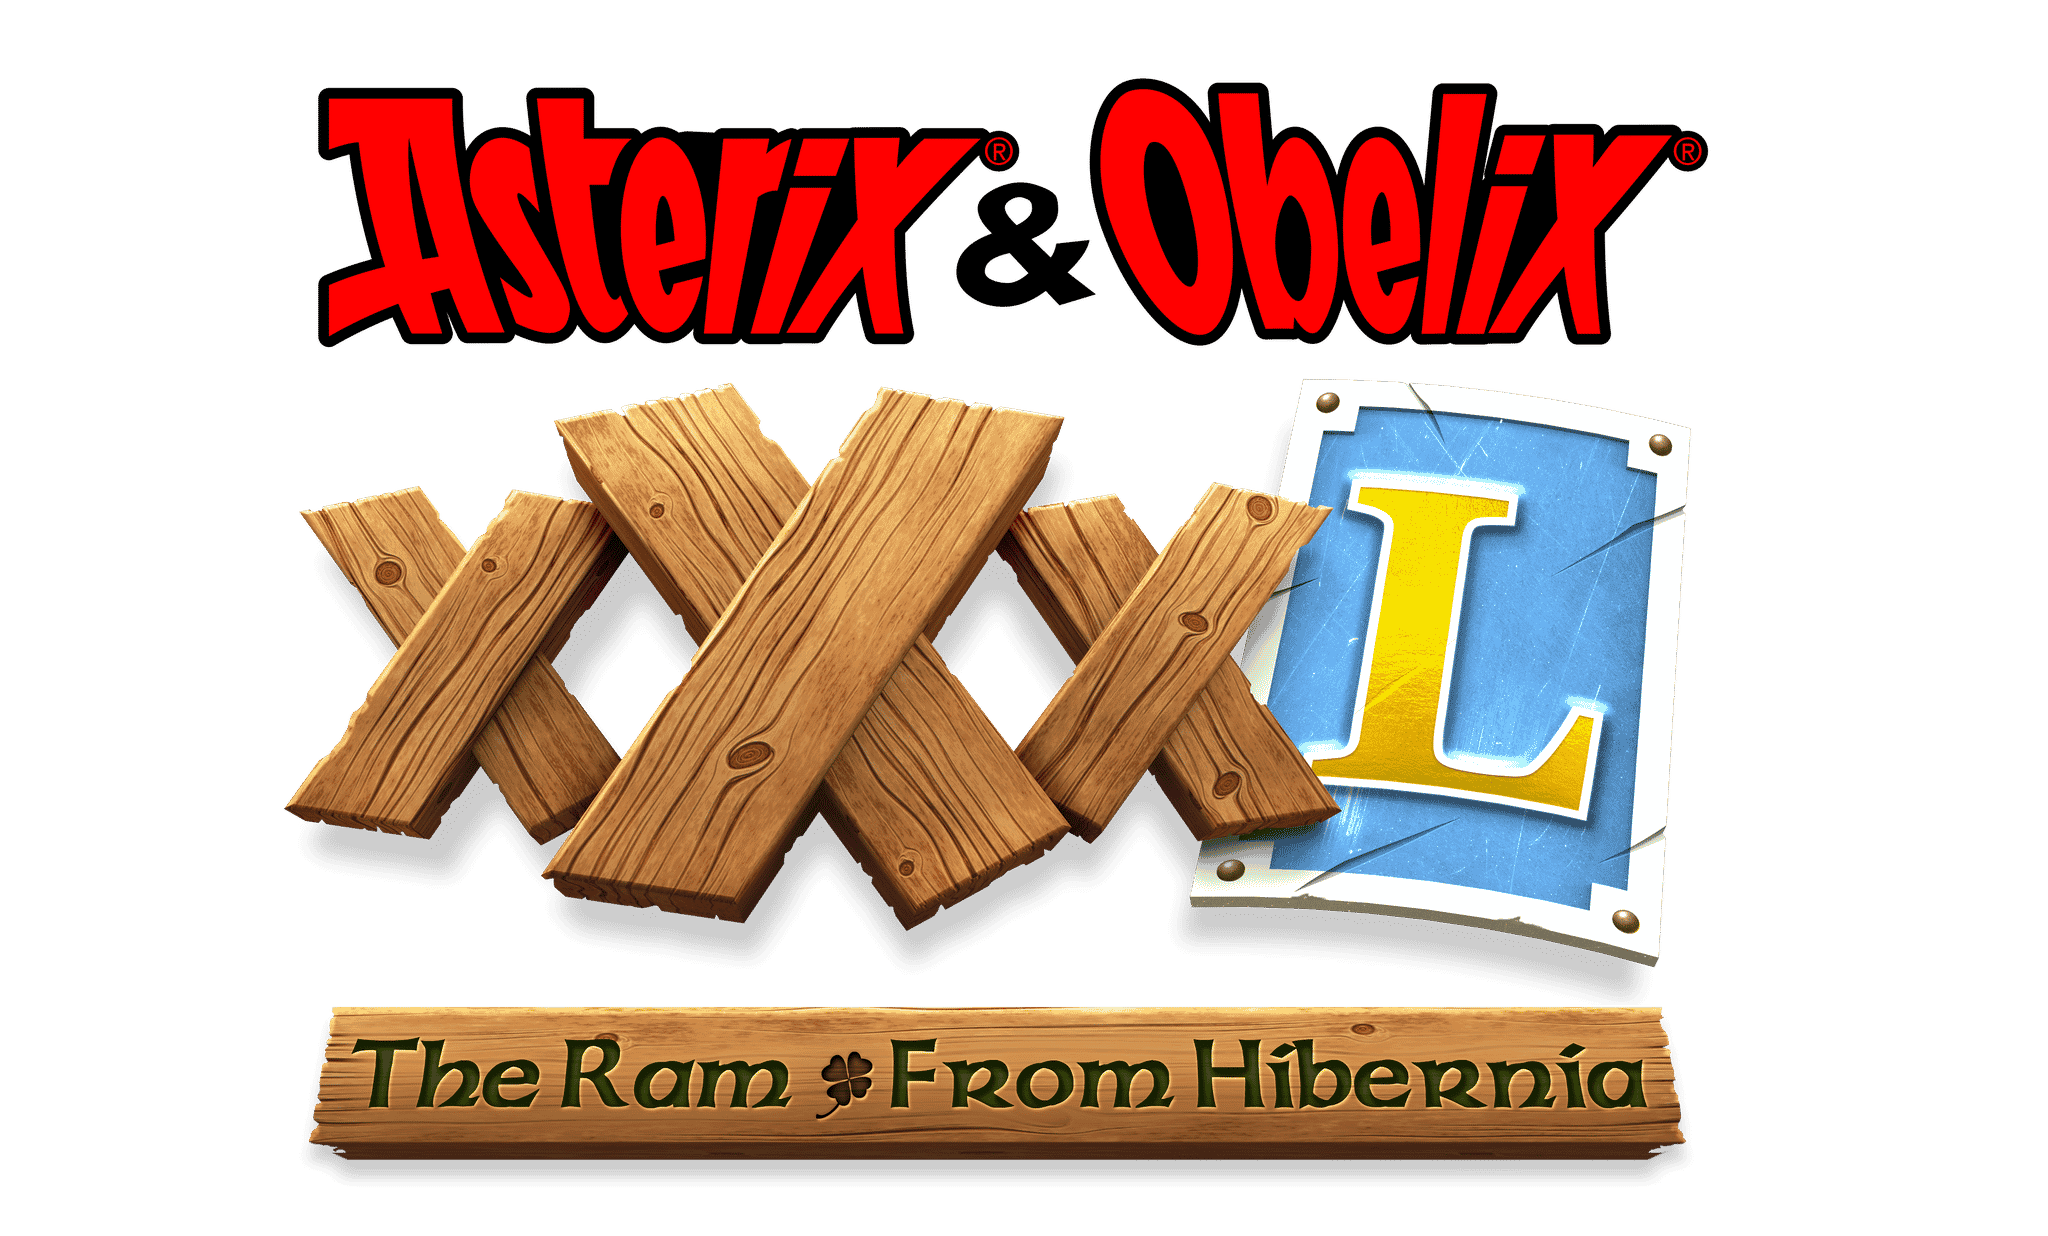 Asterix & Obelix XXXL: The Ram From Hibernia header